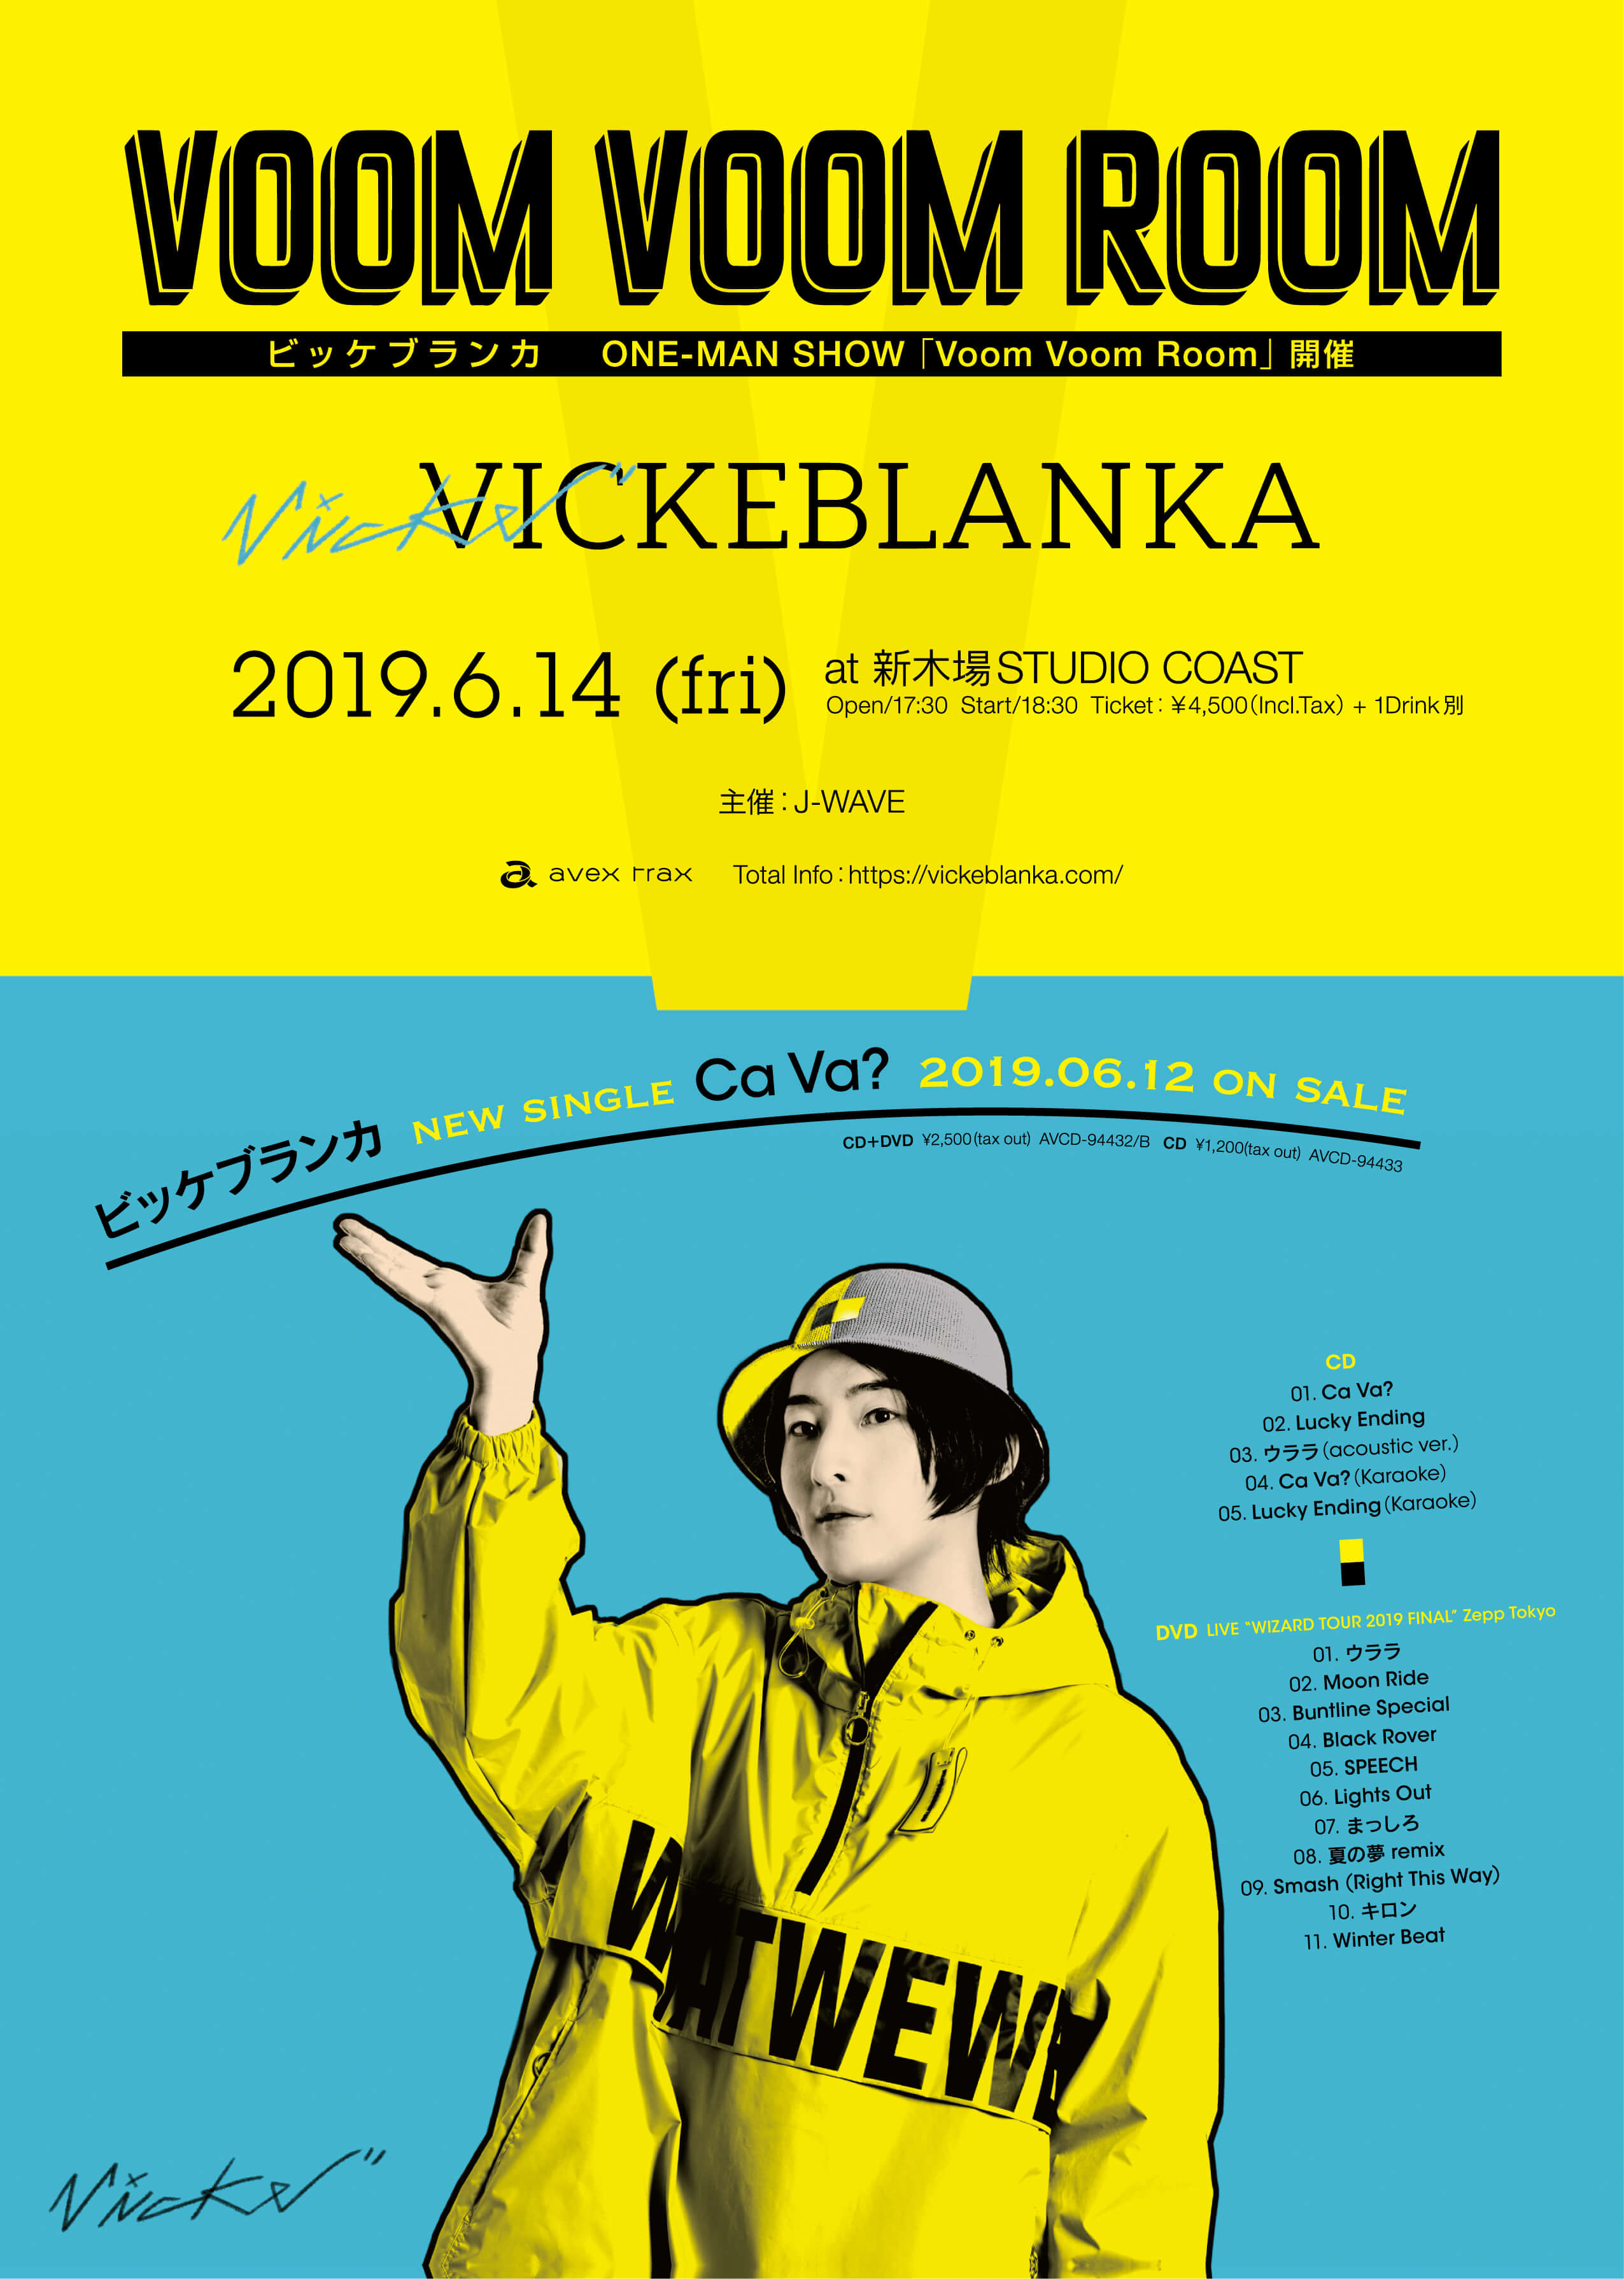 Black Clover Opening 10: Black Catcher by Vickeblanka 🎶